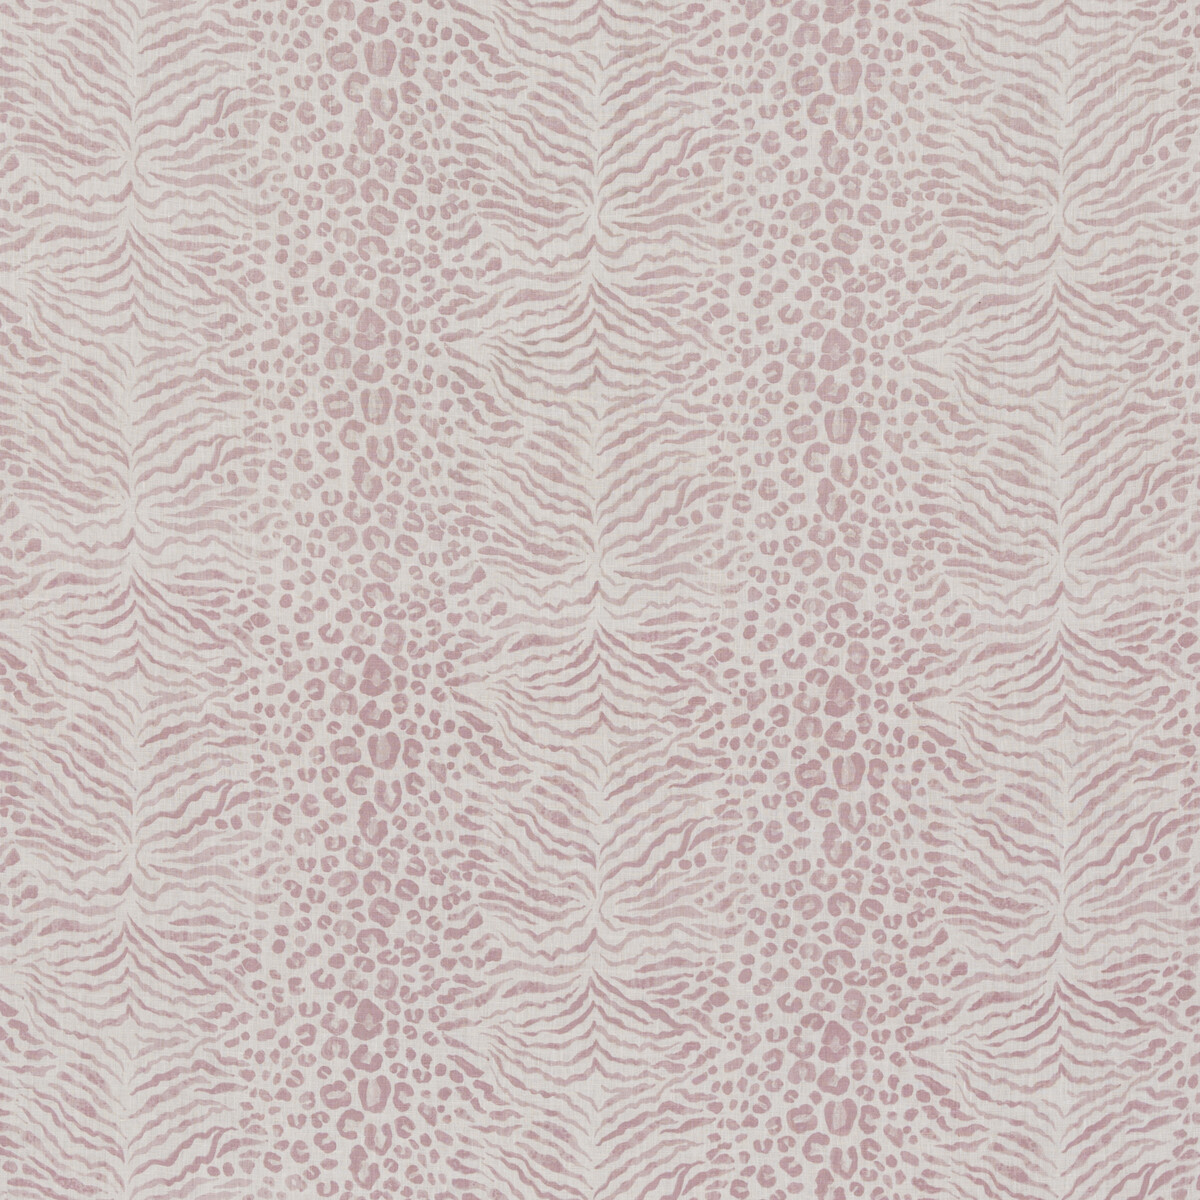 G P & J Baker Bp10952.440.0 Chatto Multipurpose Fabric in Blush/Pink/White